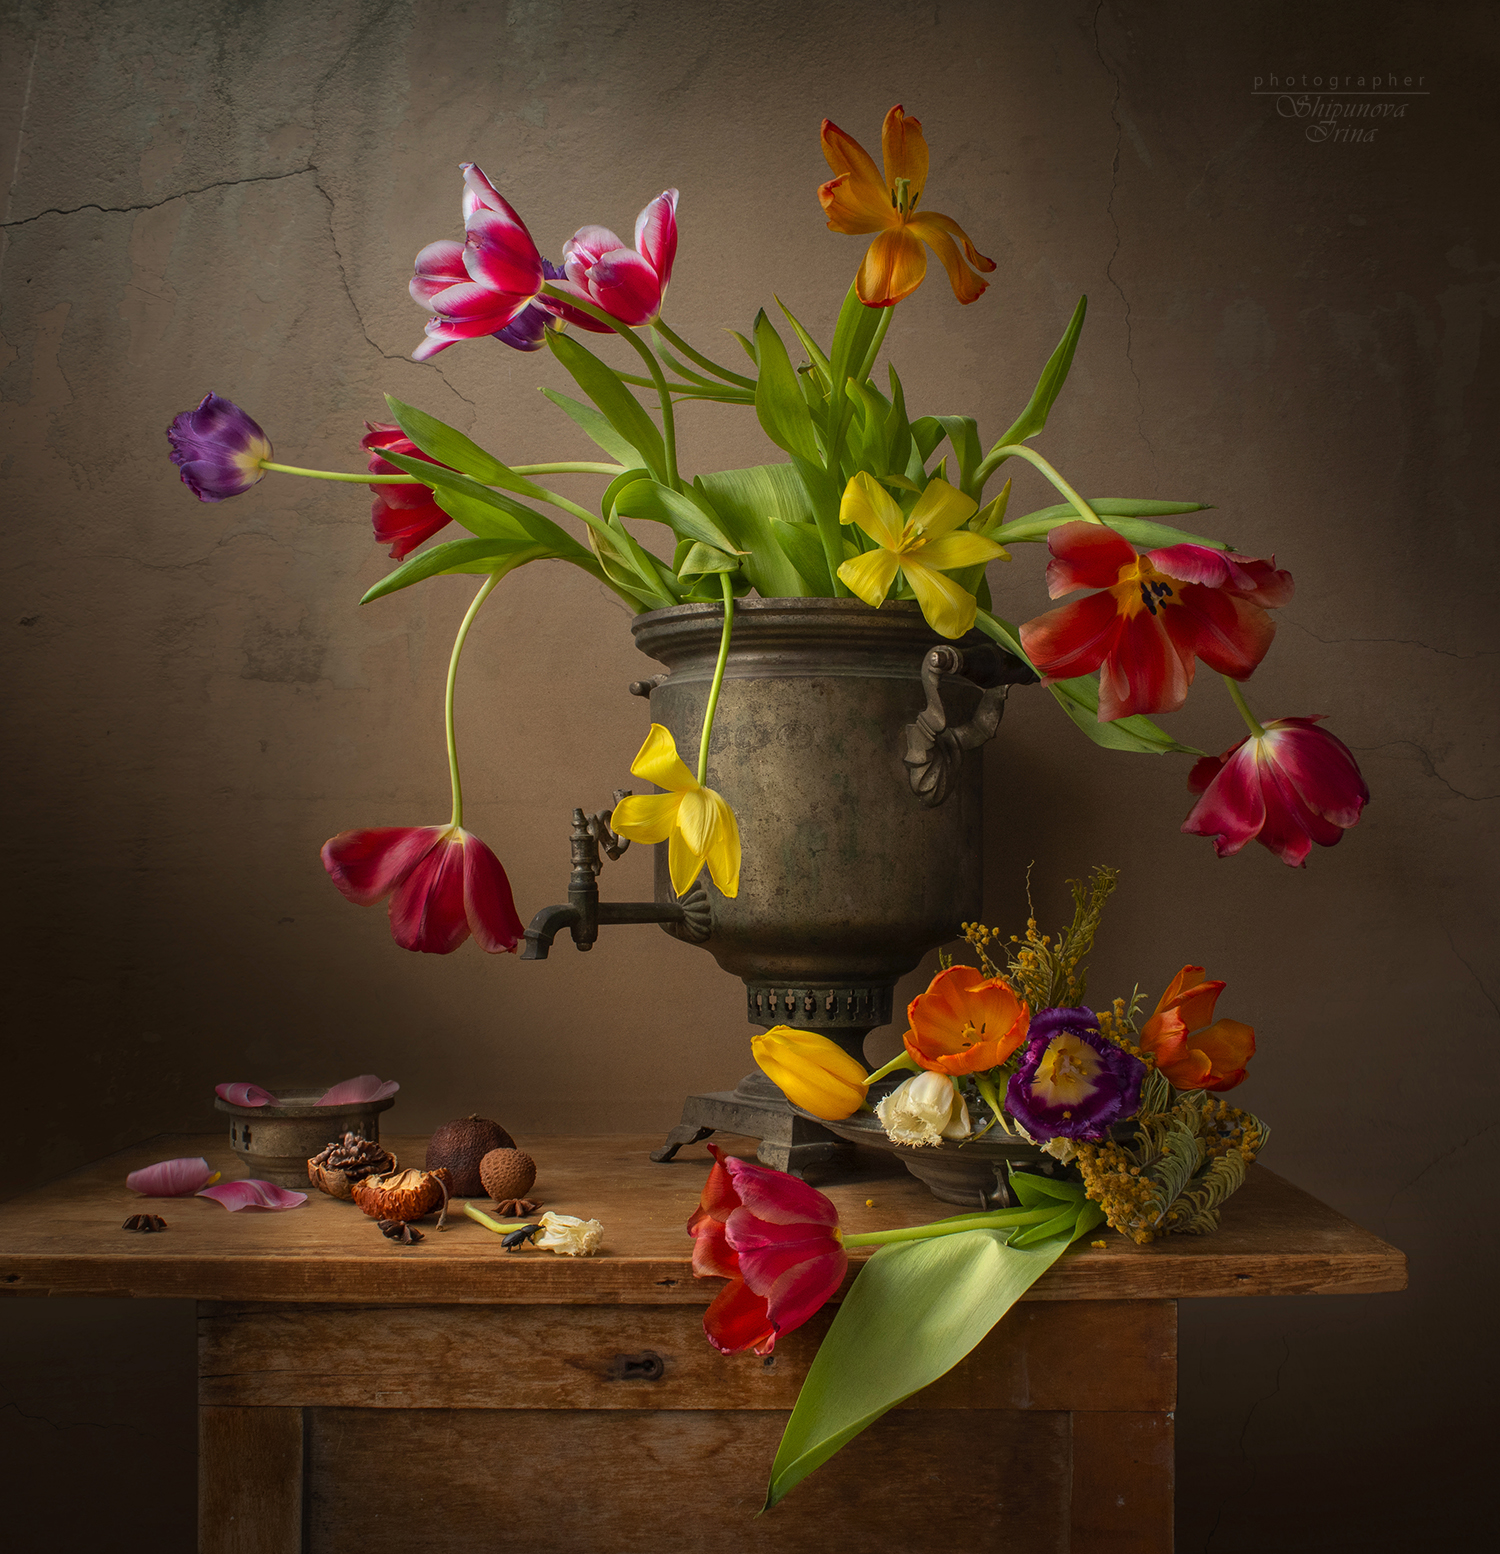 General 1500x1554 Irina Shipunova still life flowers petals vases colorful leaves wall wood